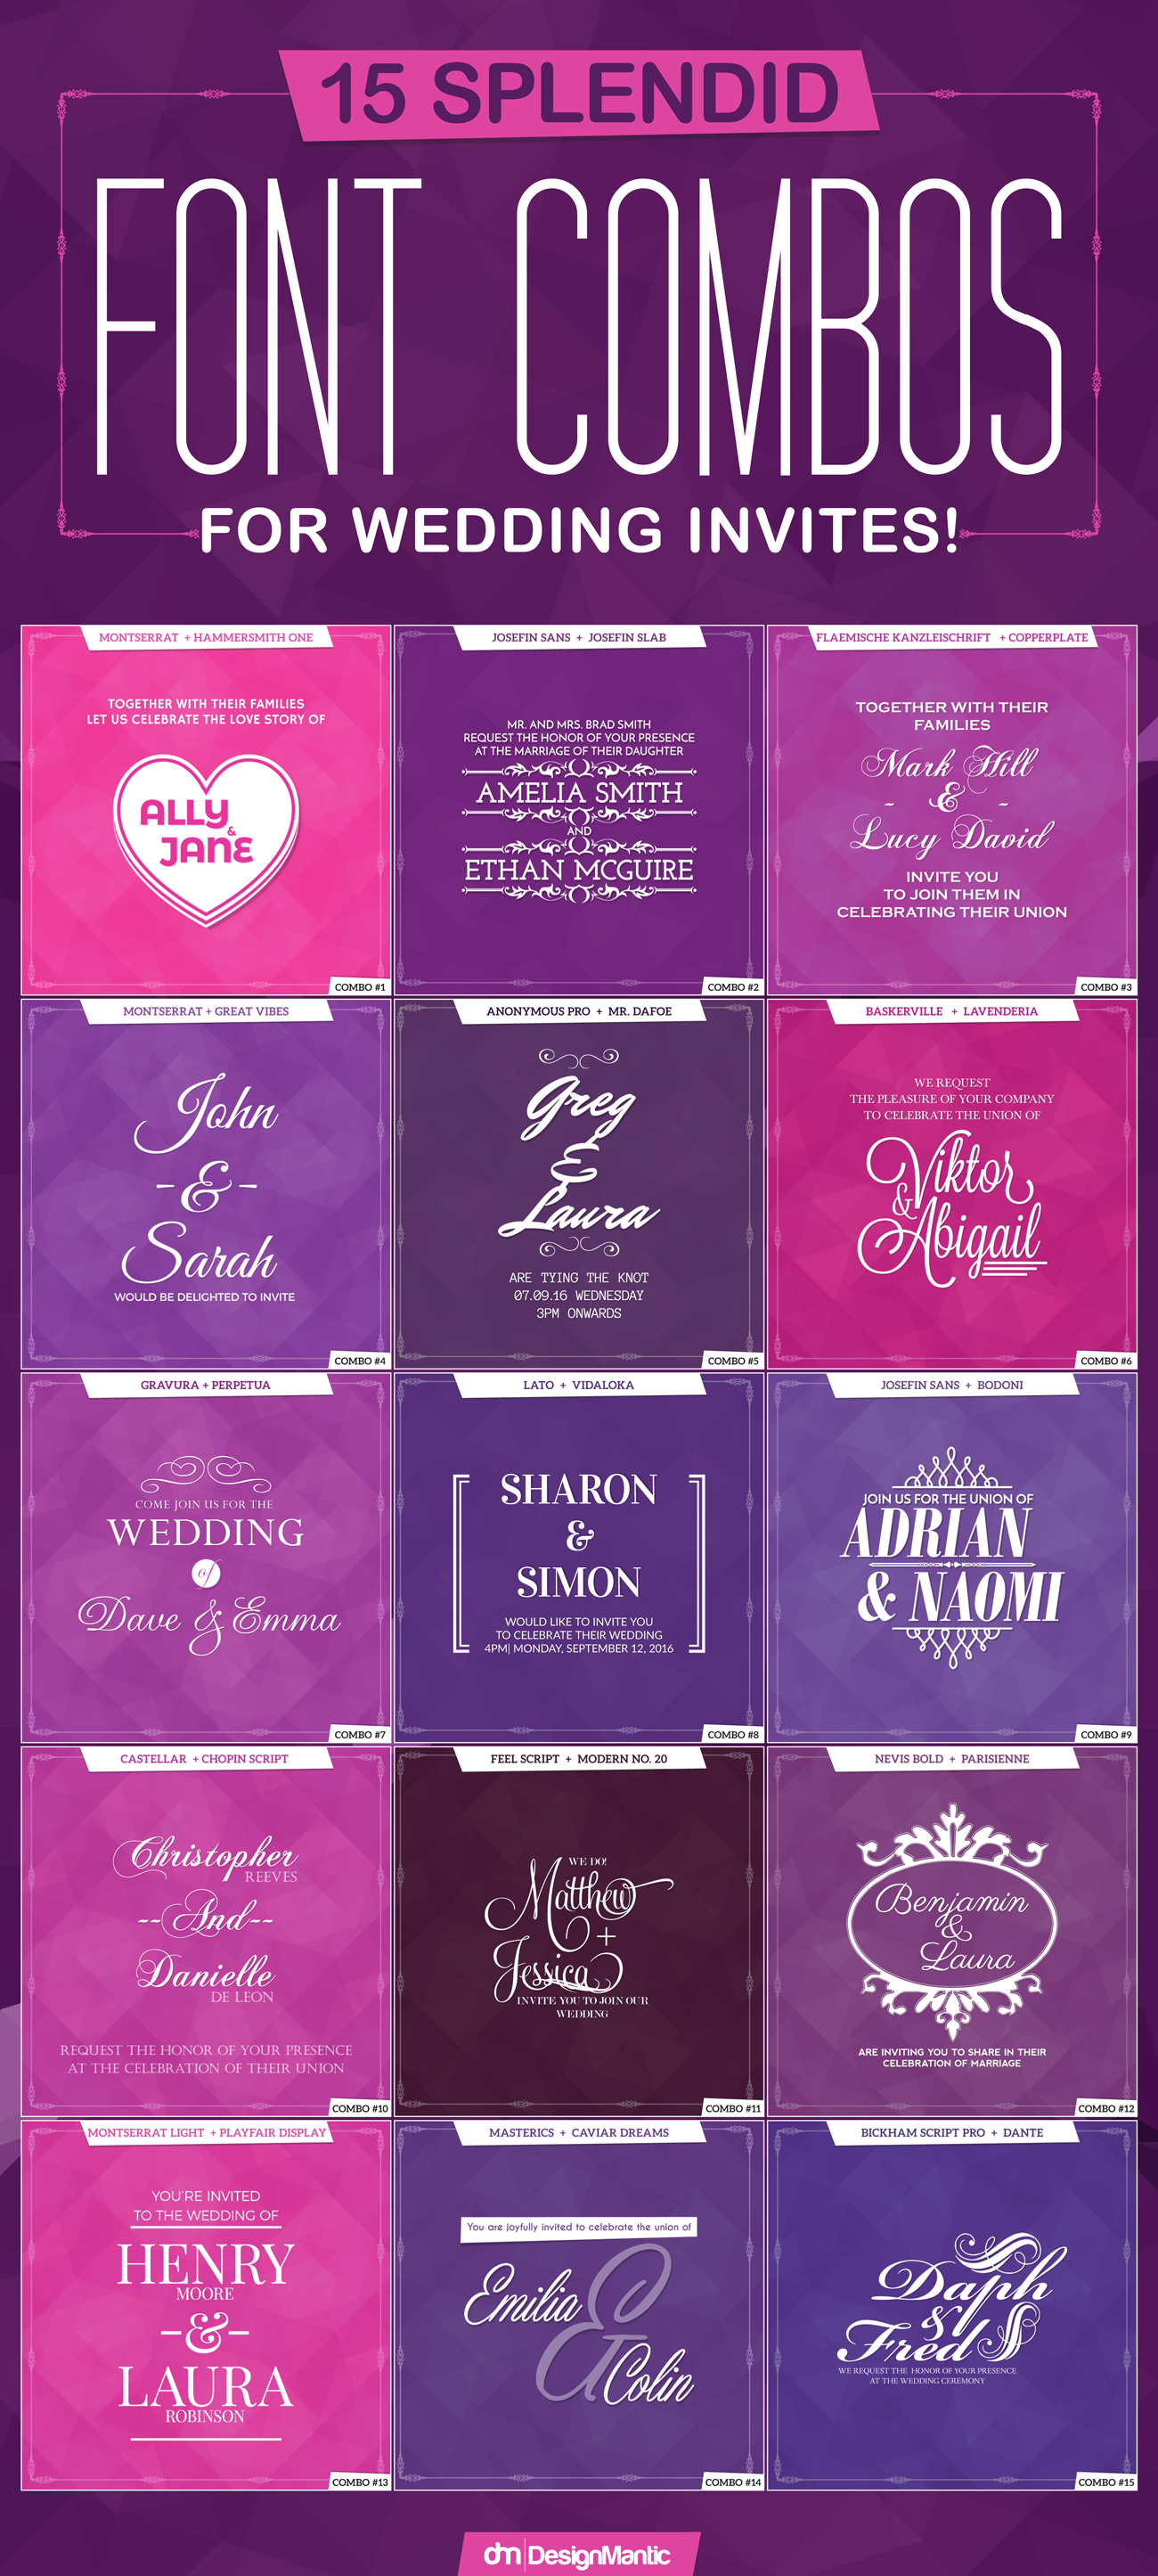 15 splendid font combos for wedding invites